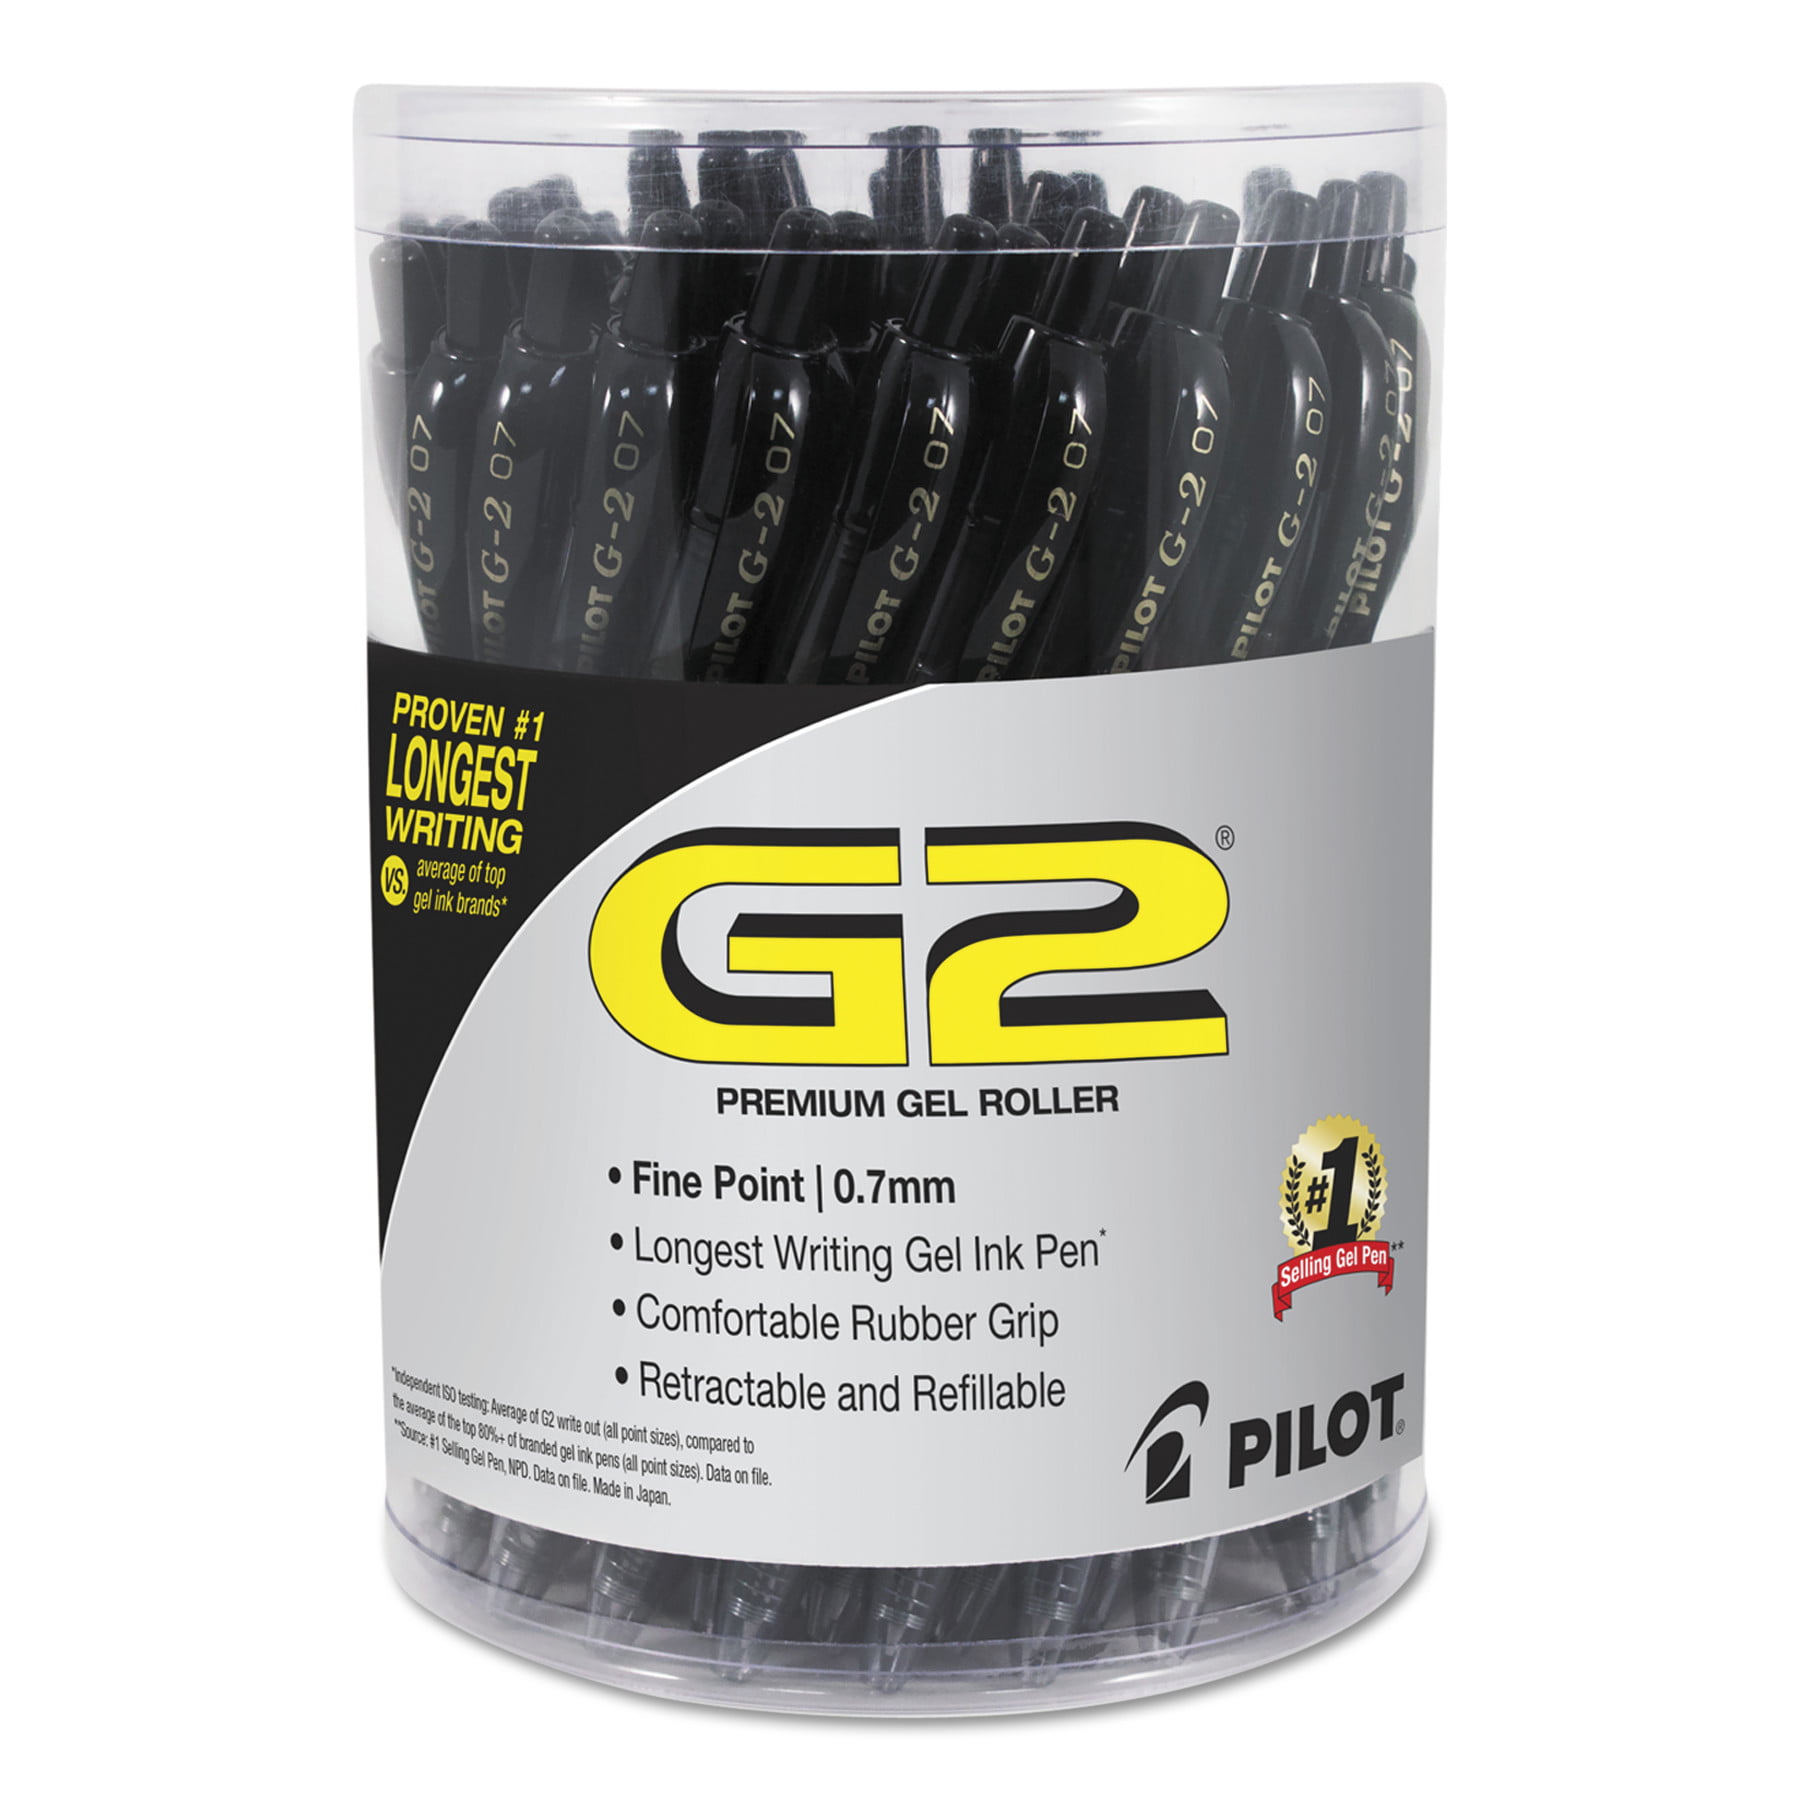 1 PACK, 31306 Black 5-Pack, Ultra Fine Point PILOT G2 Premium Refillable & Retractable Rolling Ball Gel Pens